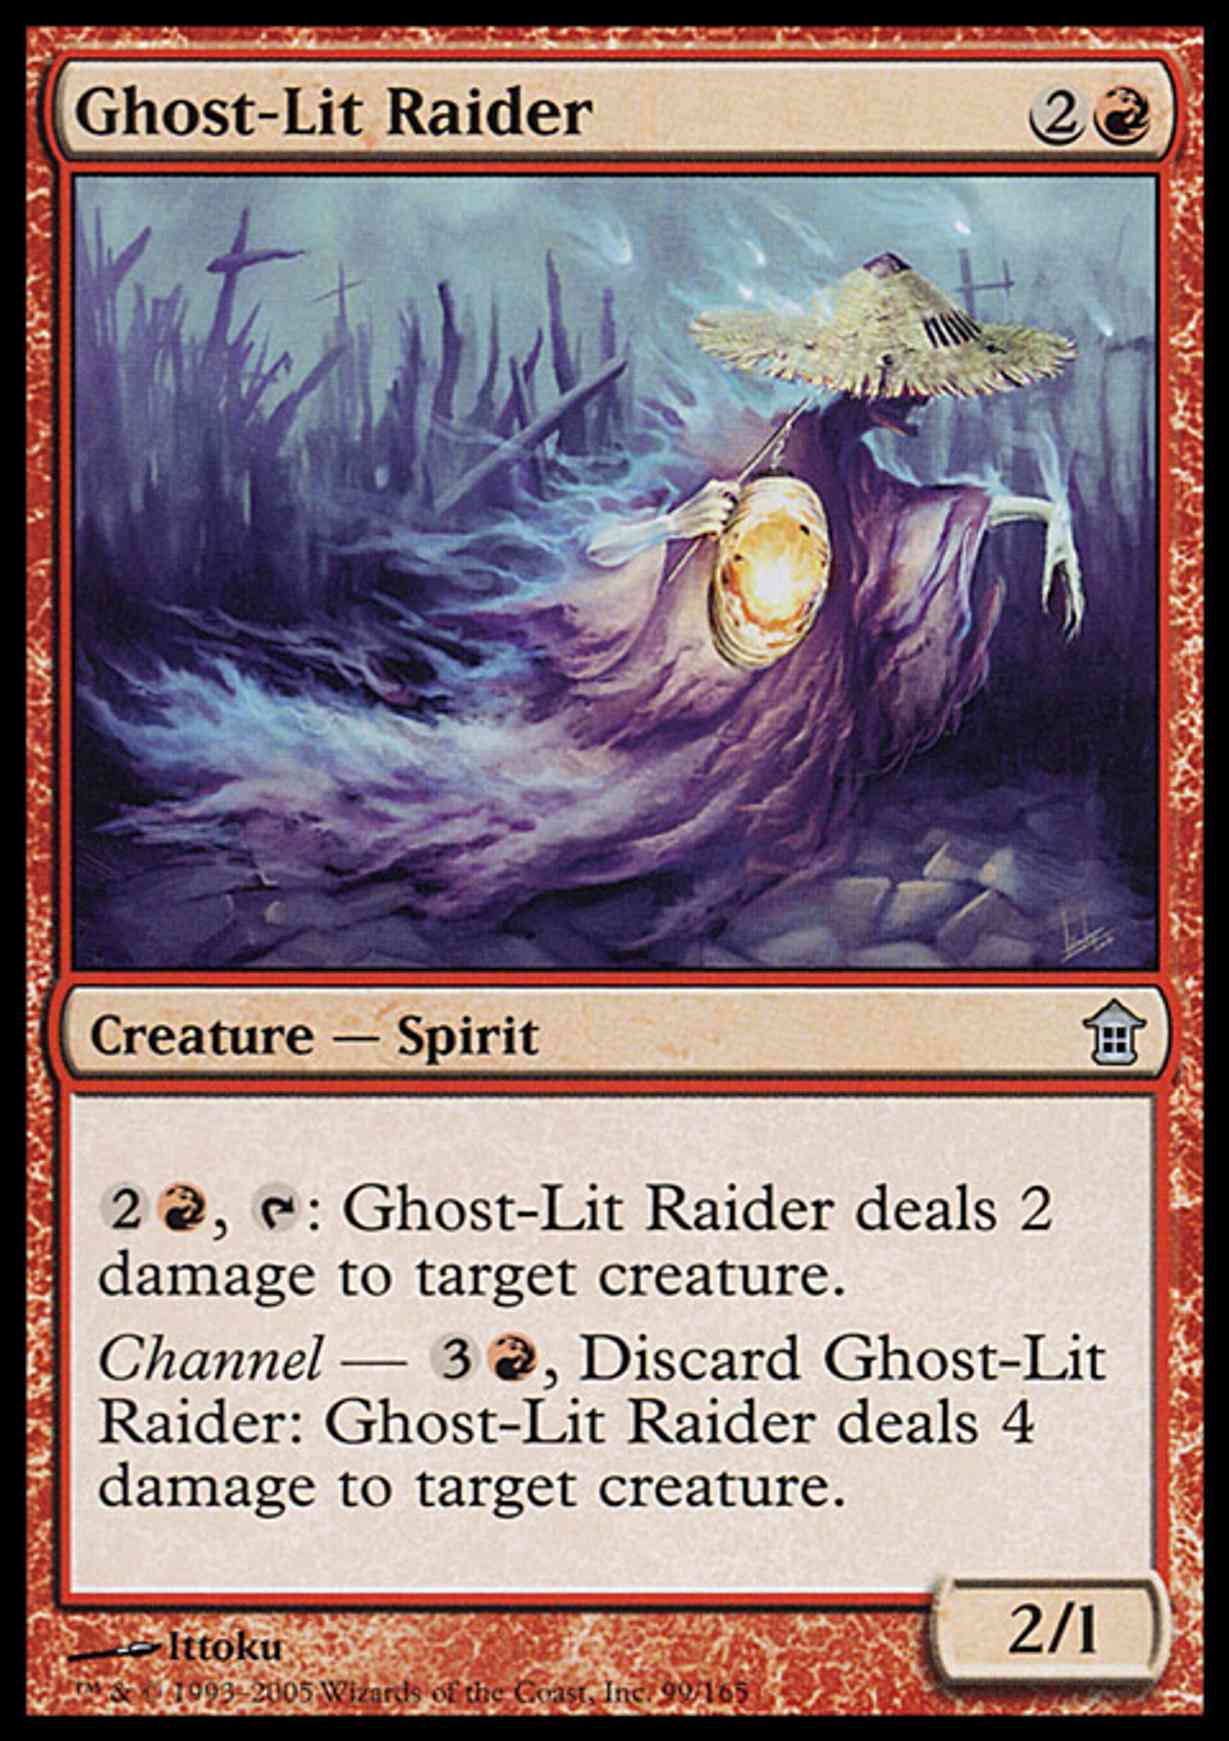 Ghost-Lit Raider magic card front